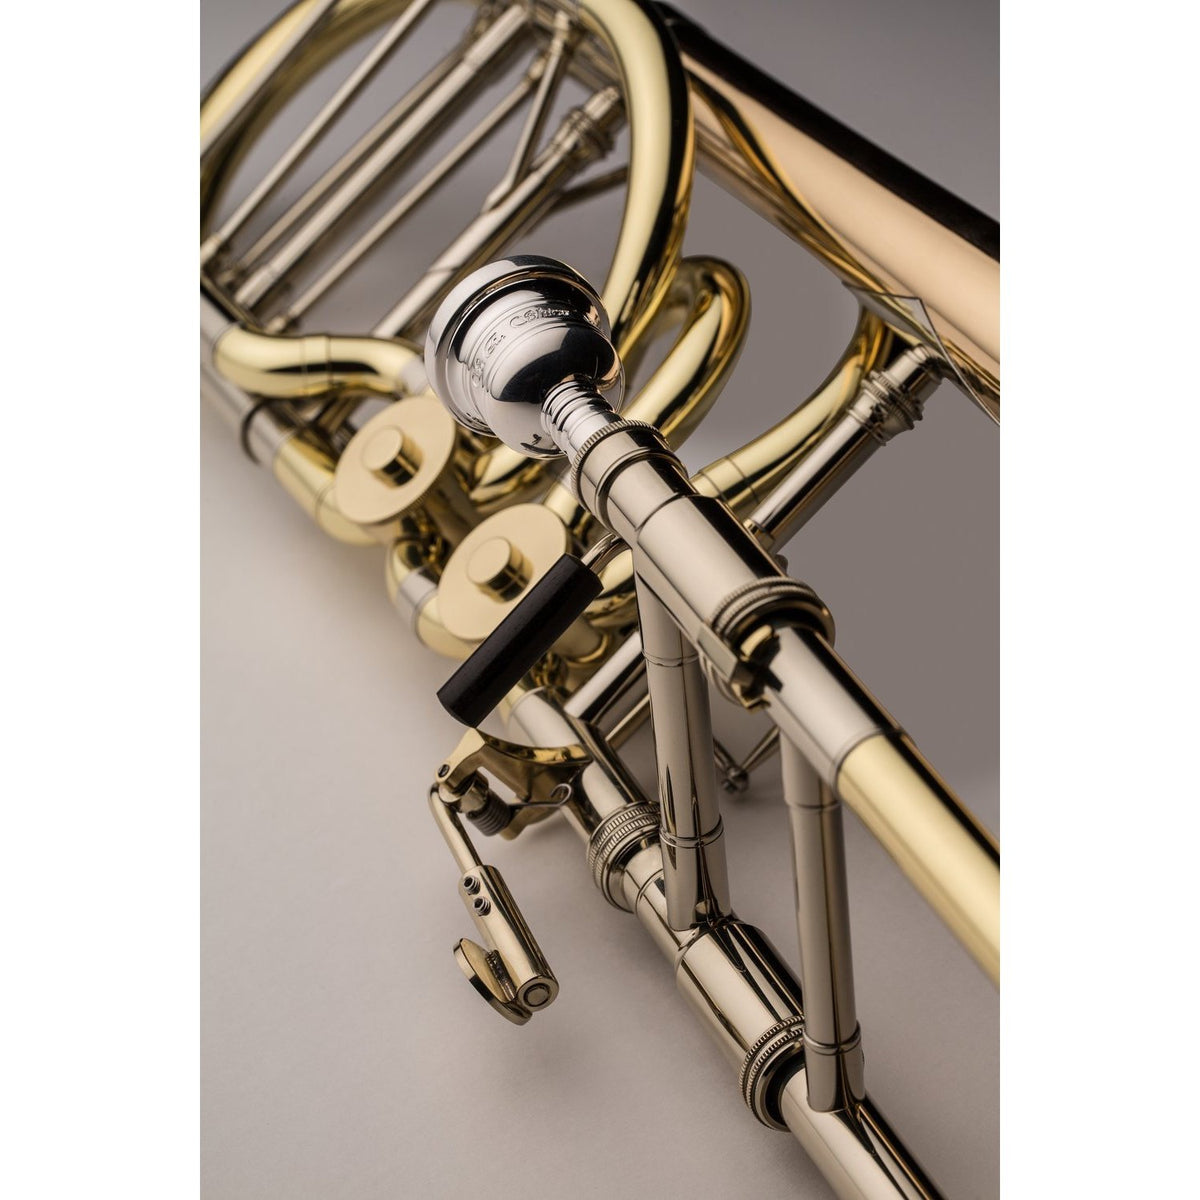 S.E. Shires - Q36YR - Q Series Bb/F/Gb/D Bass Trombone-Trombone-S.E. Shires-Music Elements